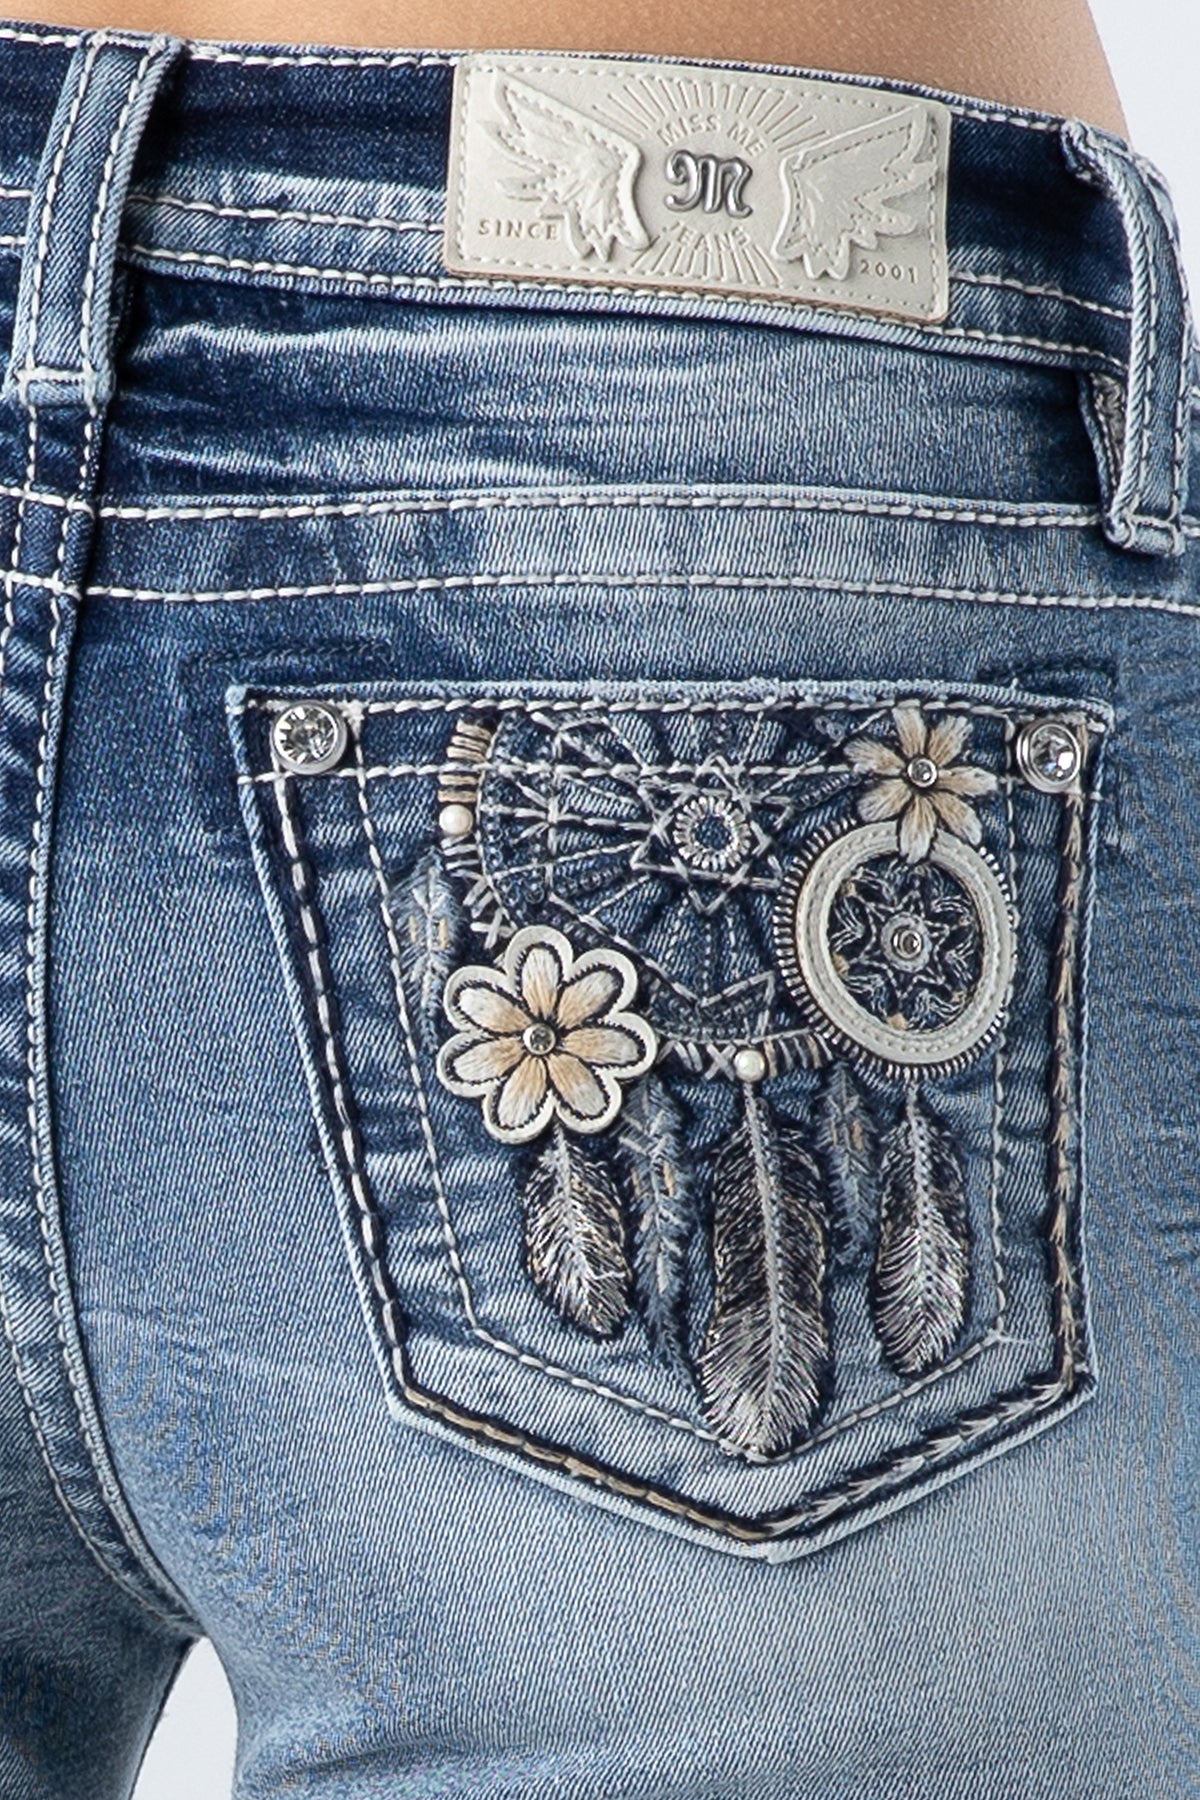 Flower Dream Catcher Jeans